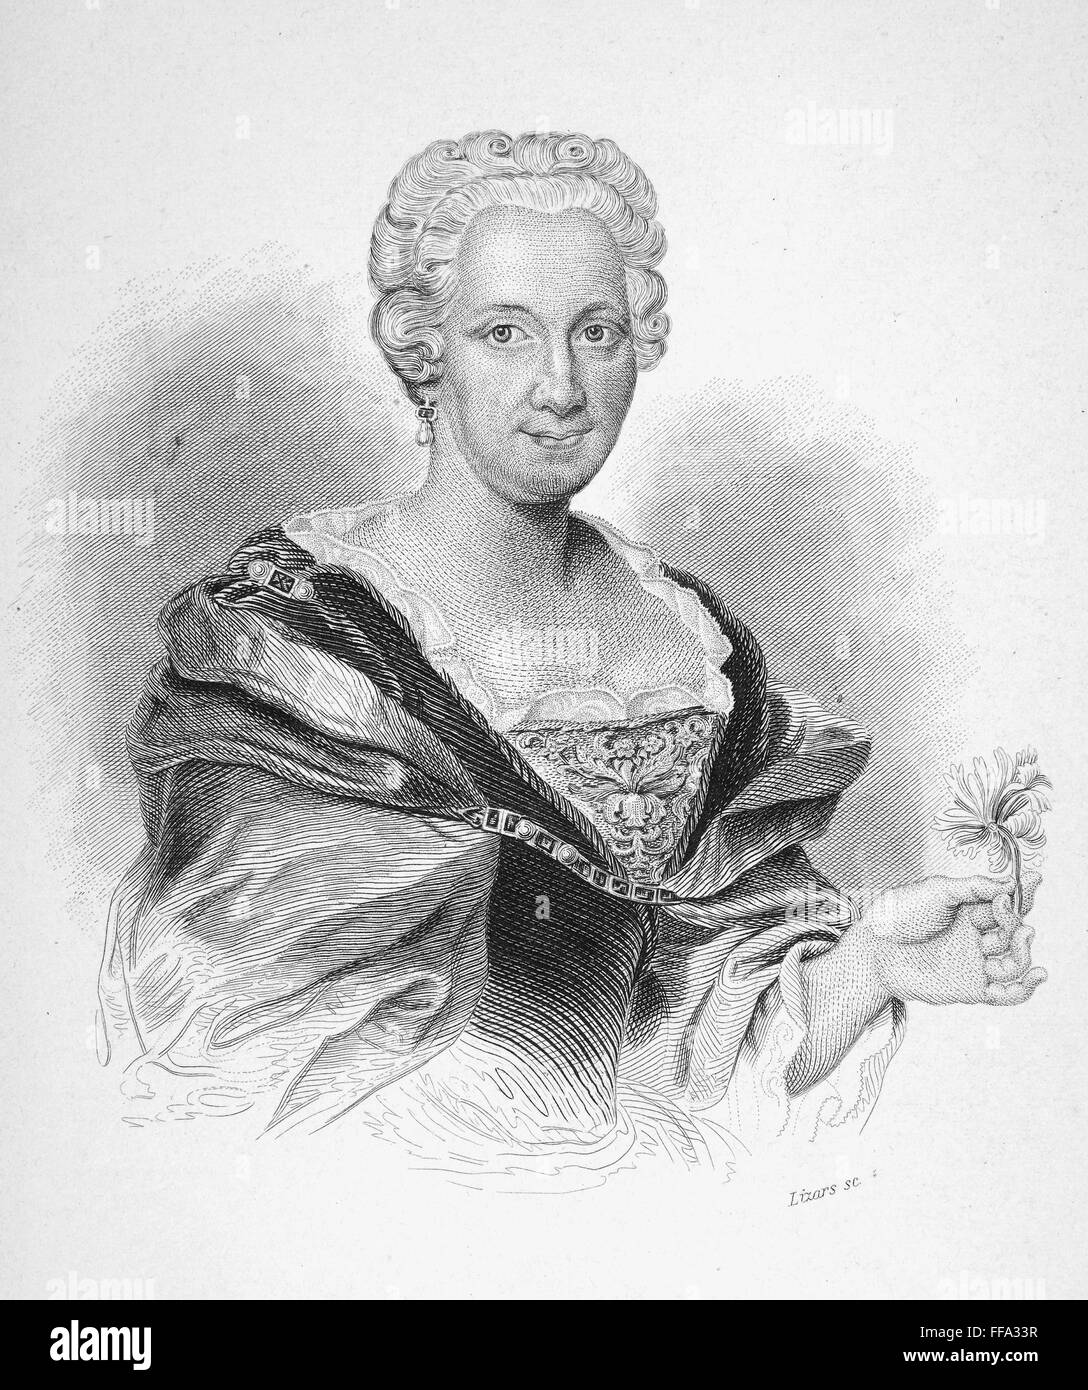 ANNA MARIA SIBYLLA MERIAN /n(1647-1717). German painter, engraver, and naturalist. Steel engraving, 19th century. Stock Photo